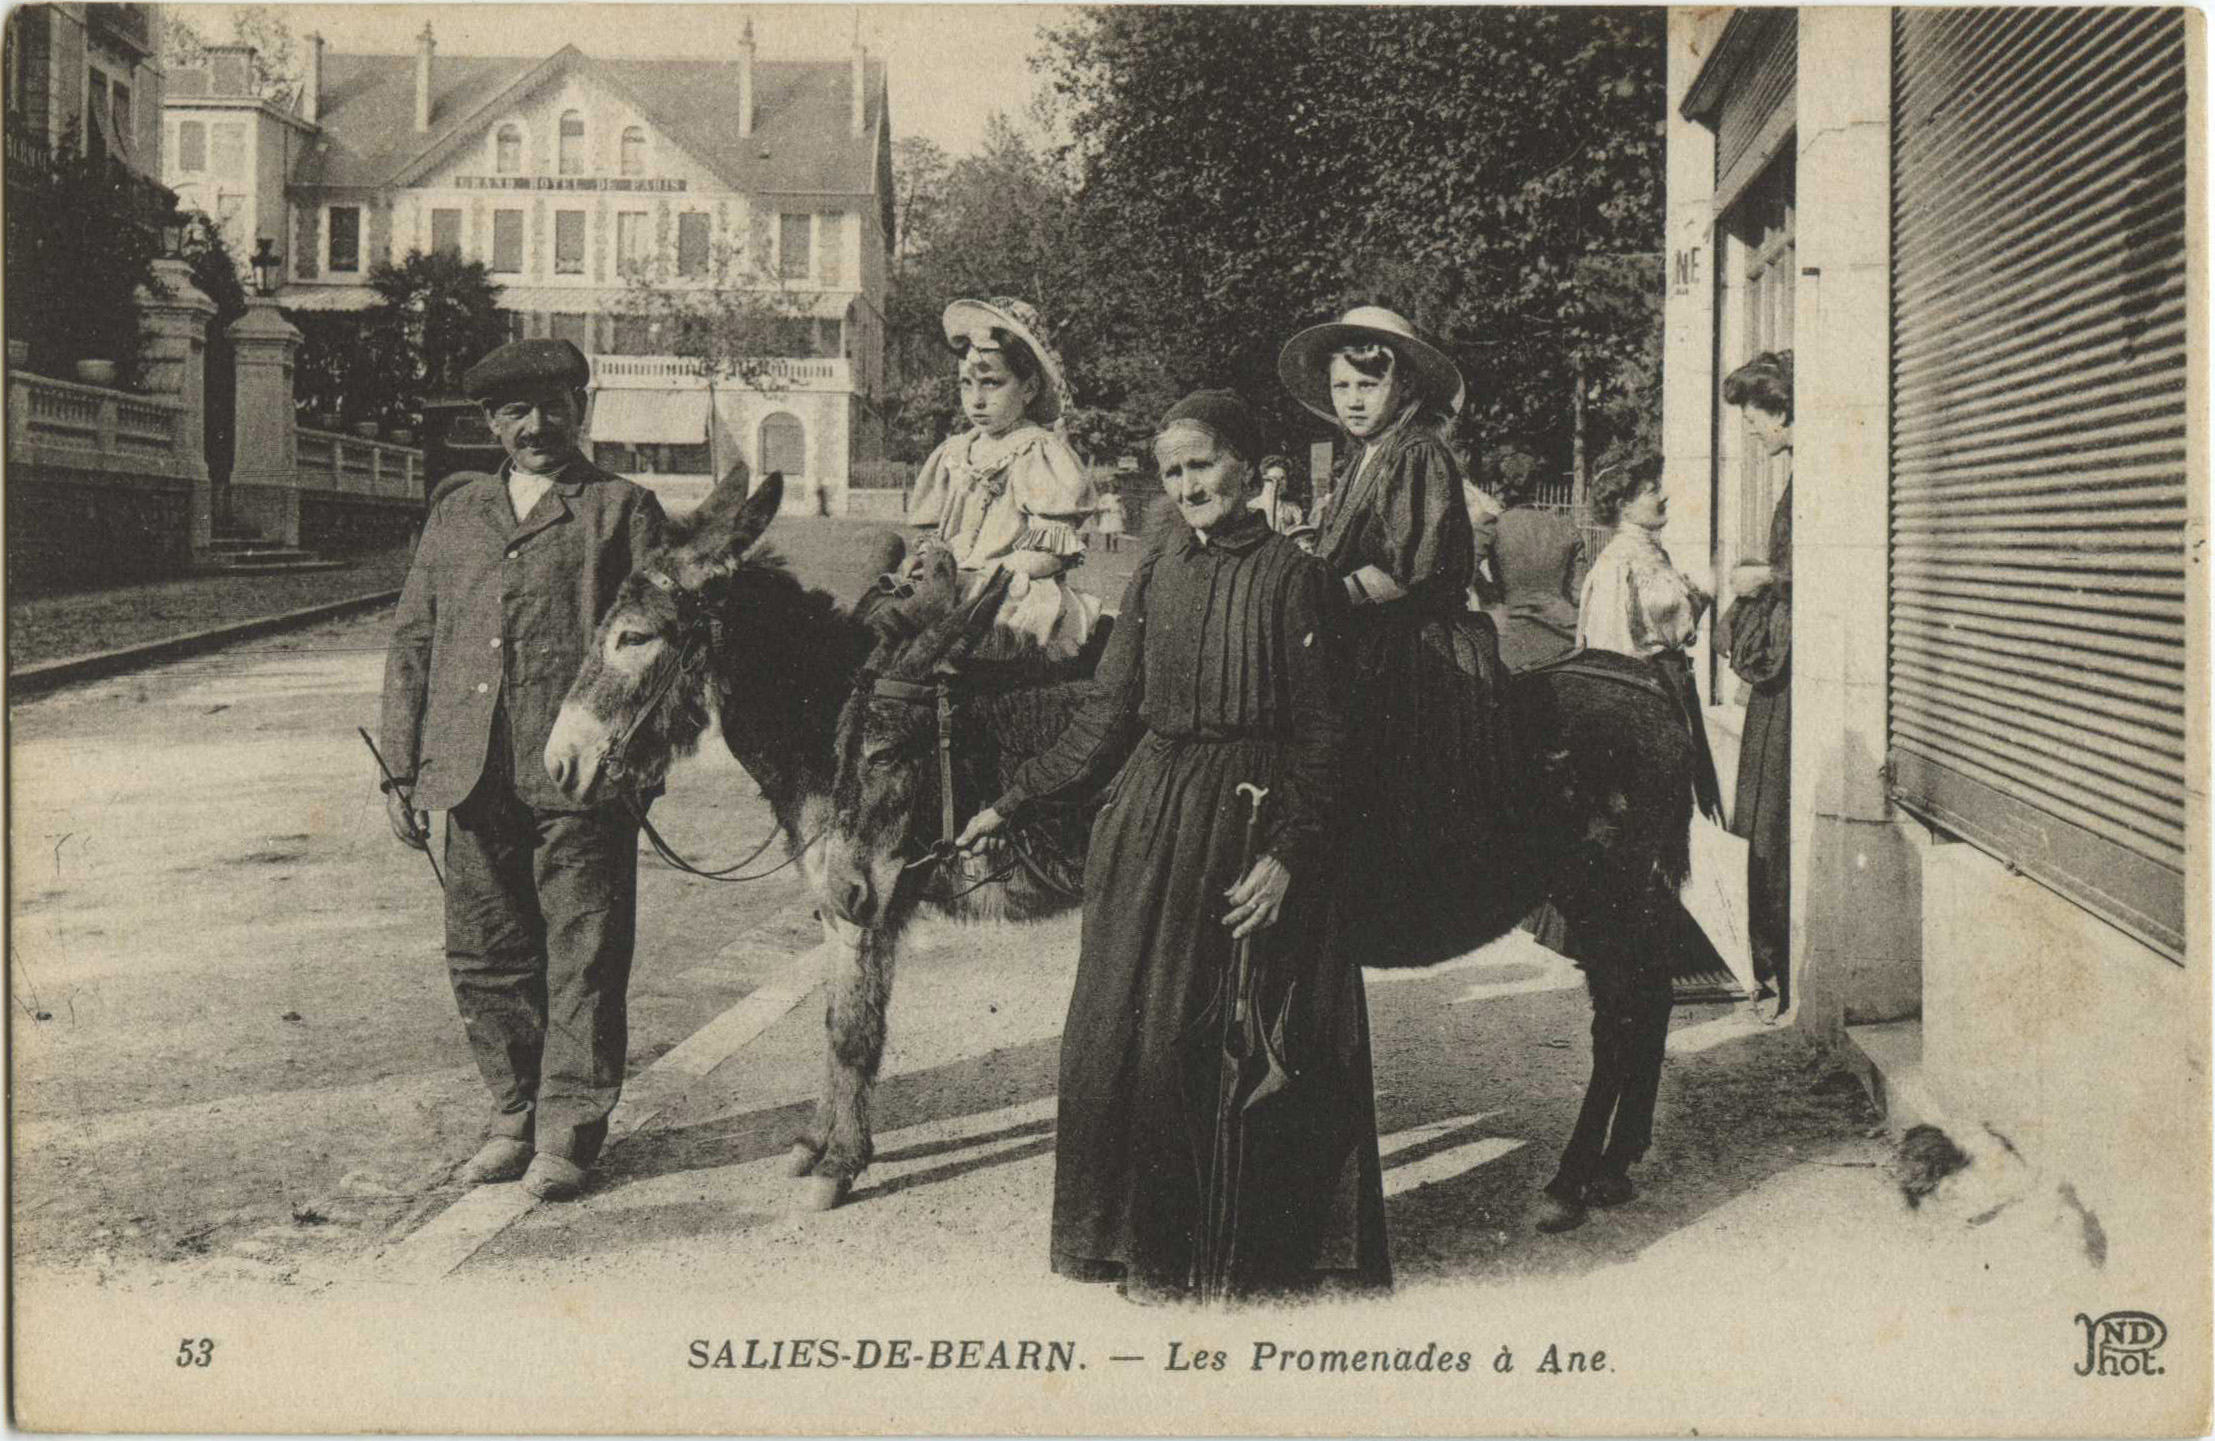 Salies-de-Béarn - Les Promenades à Ane.